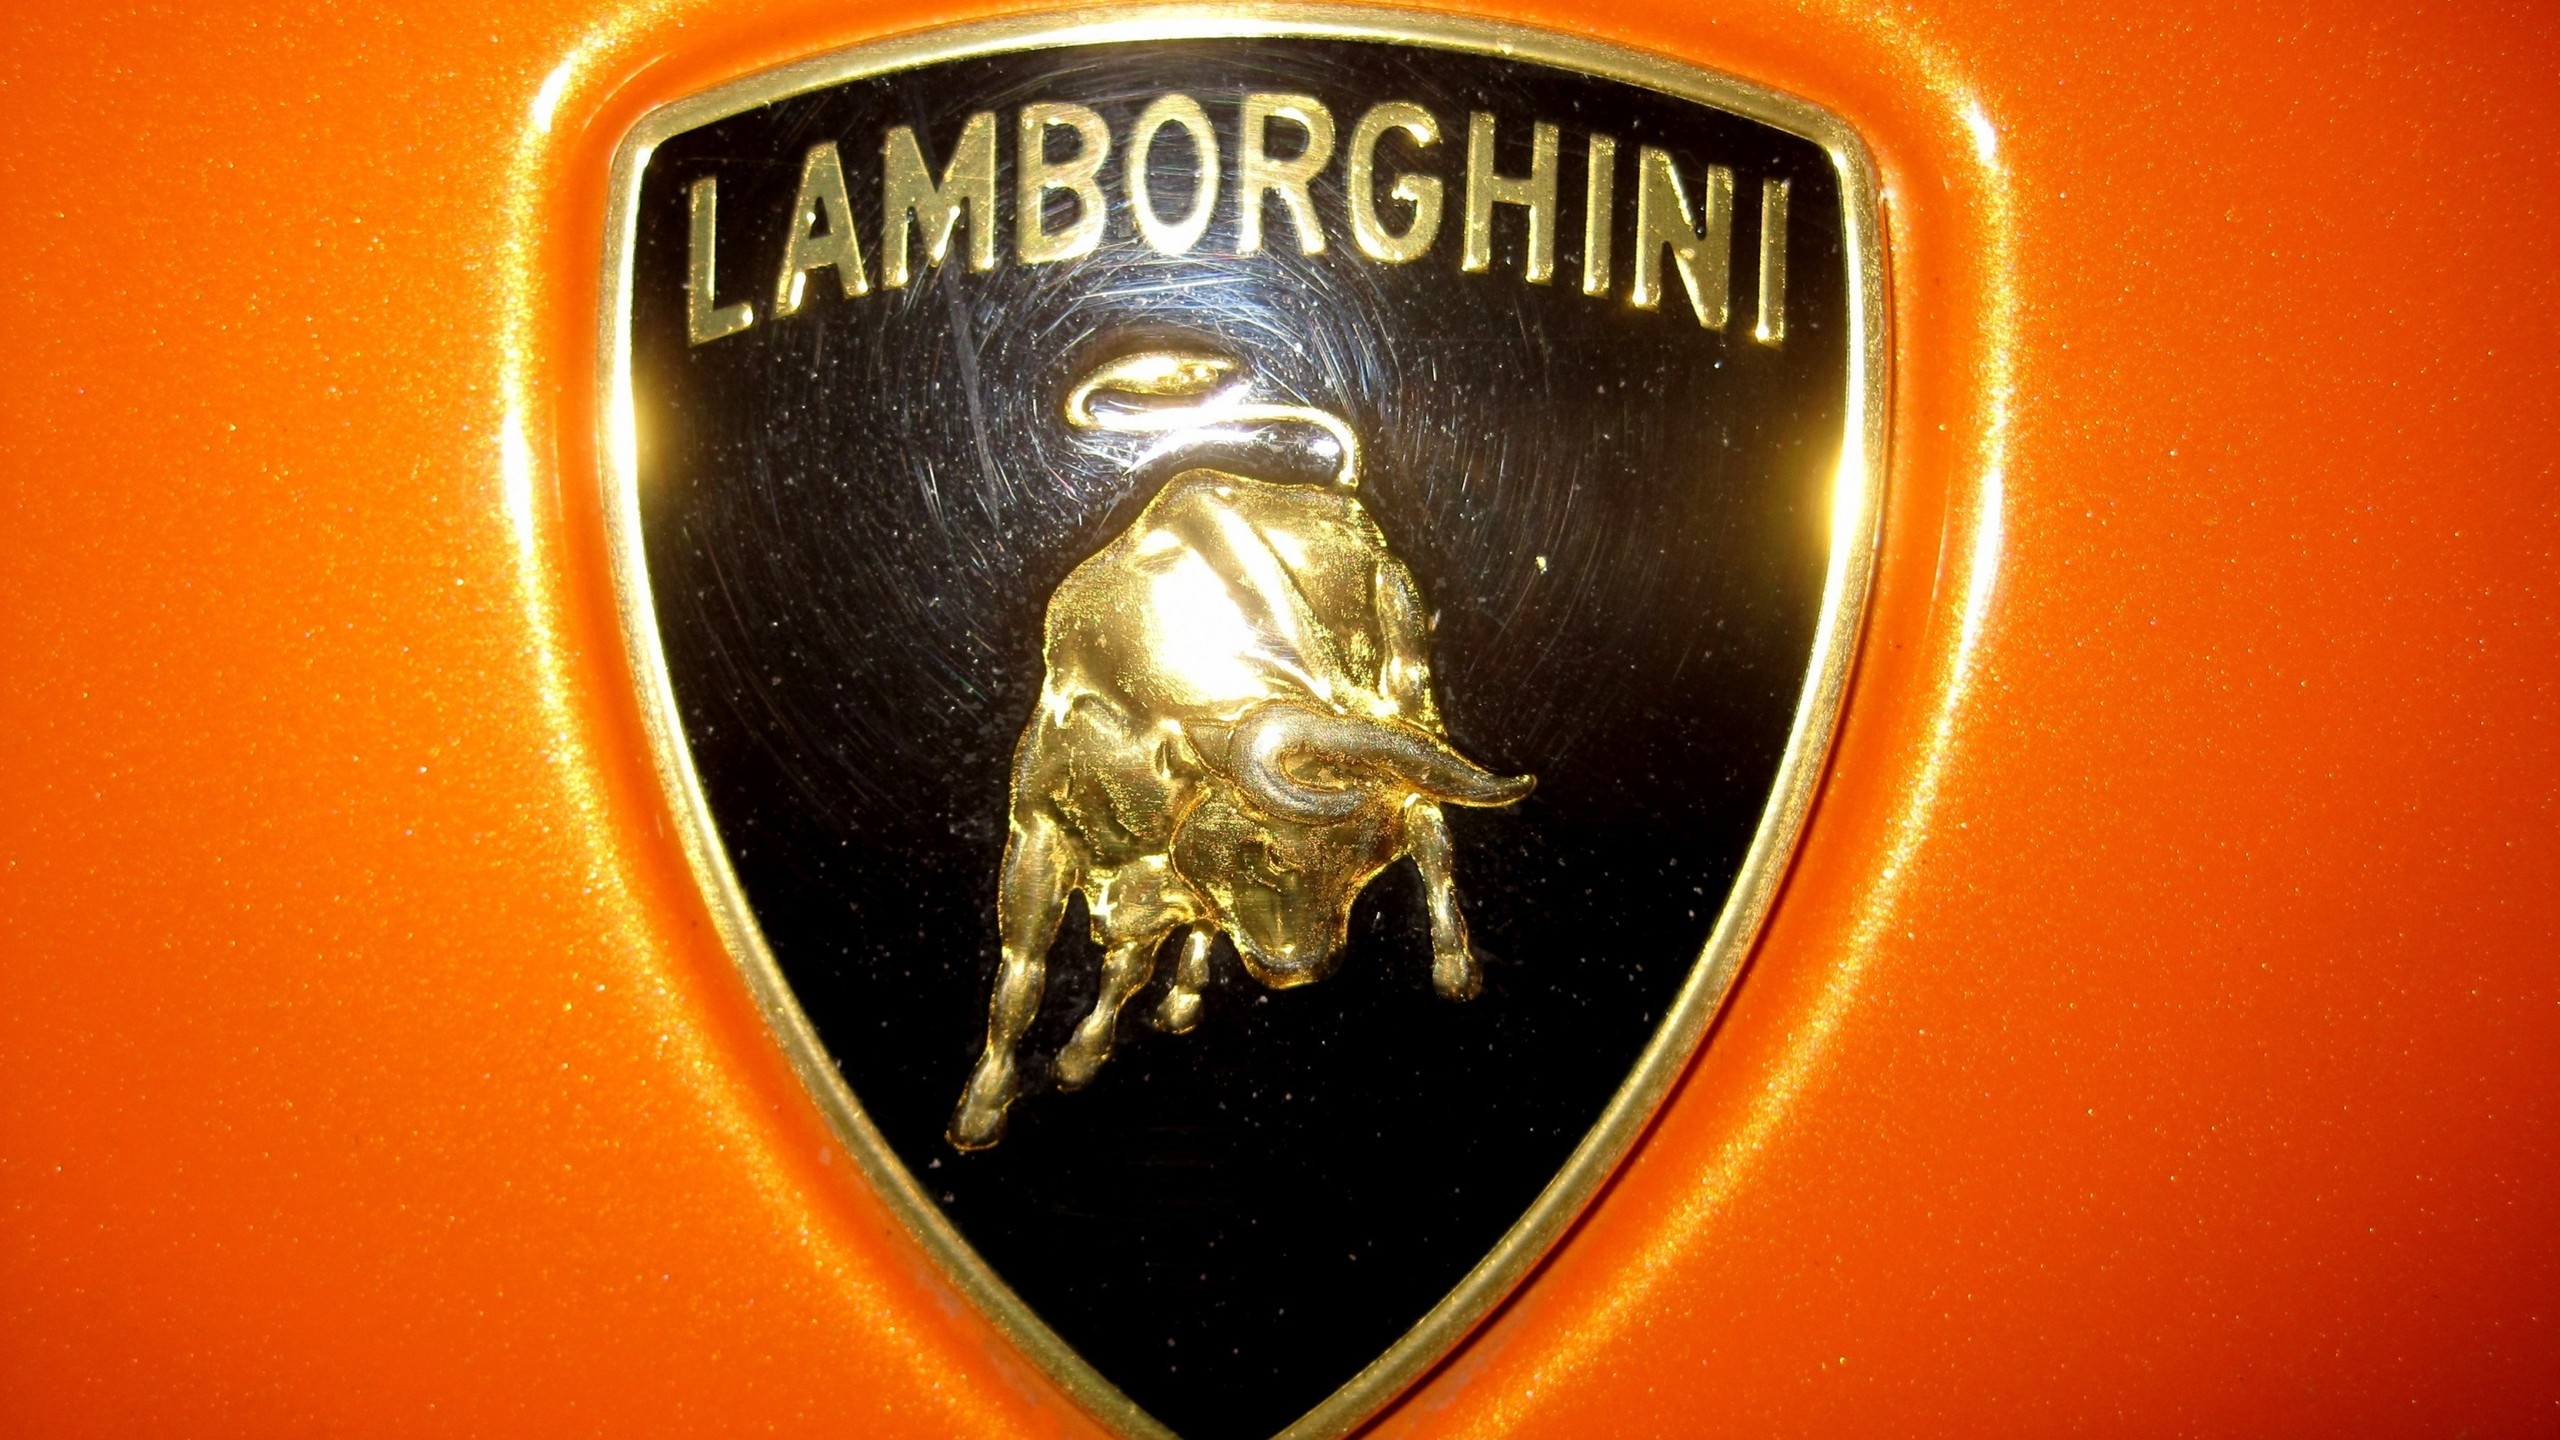 Lamborghini logo for 2560x1440 HDTV resolution